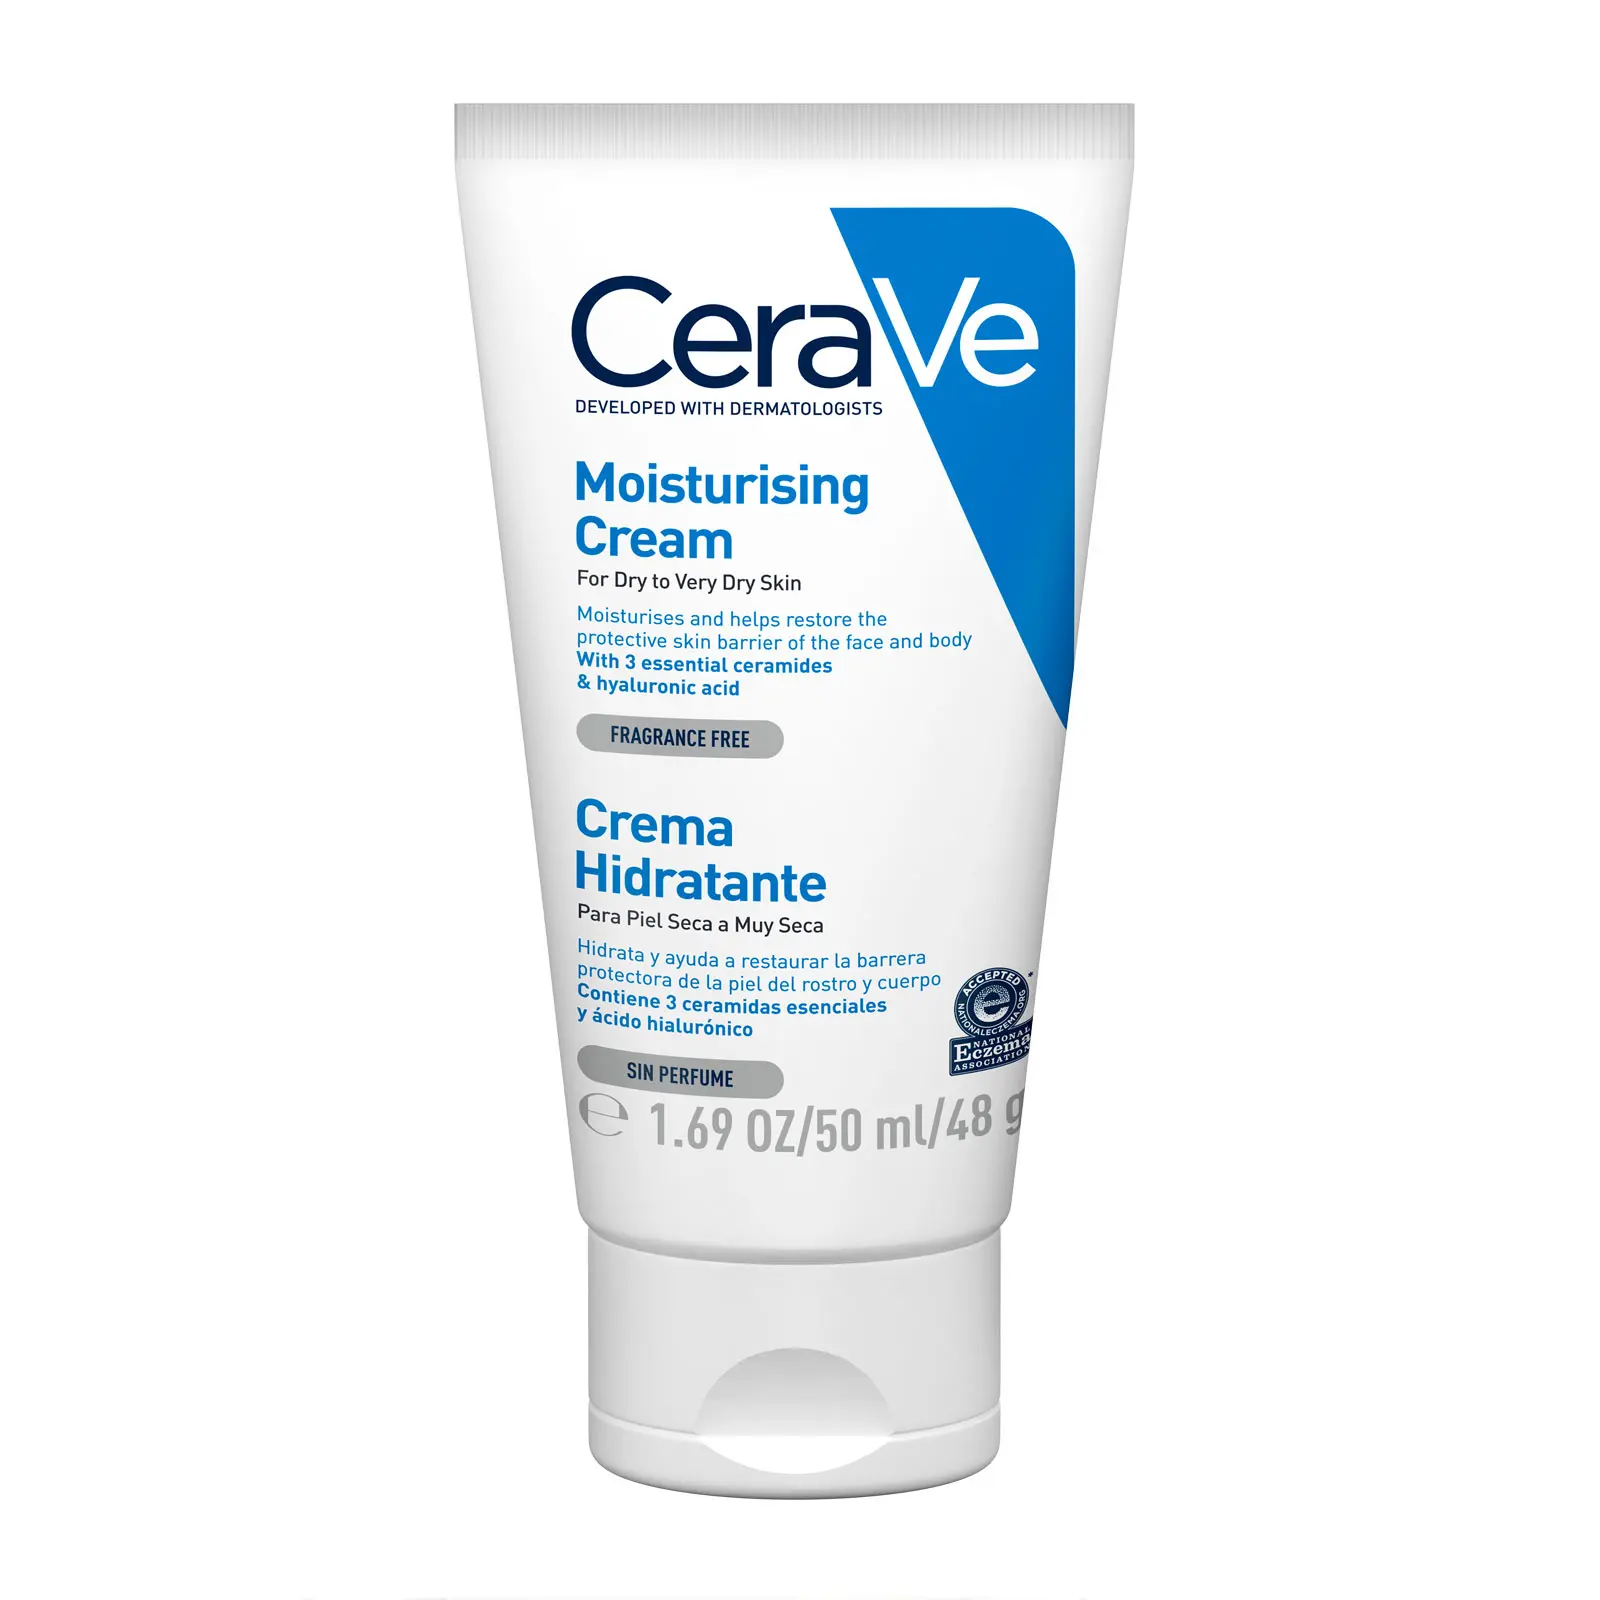 CeraVe Moisturising Cream Discounts and Cashback